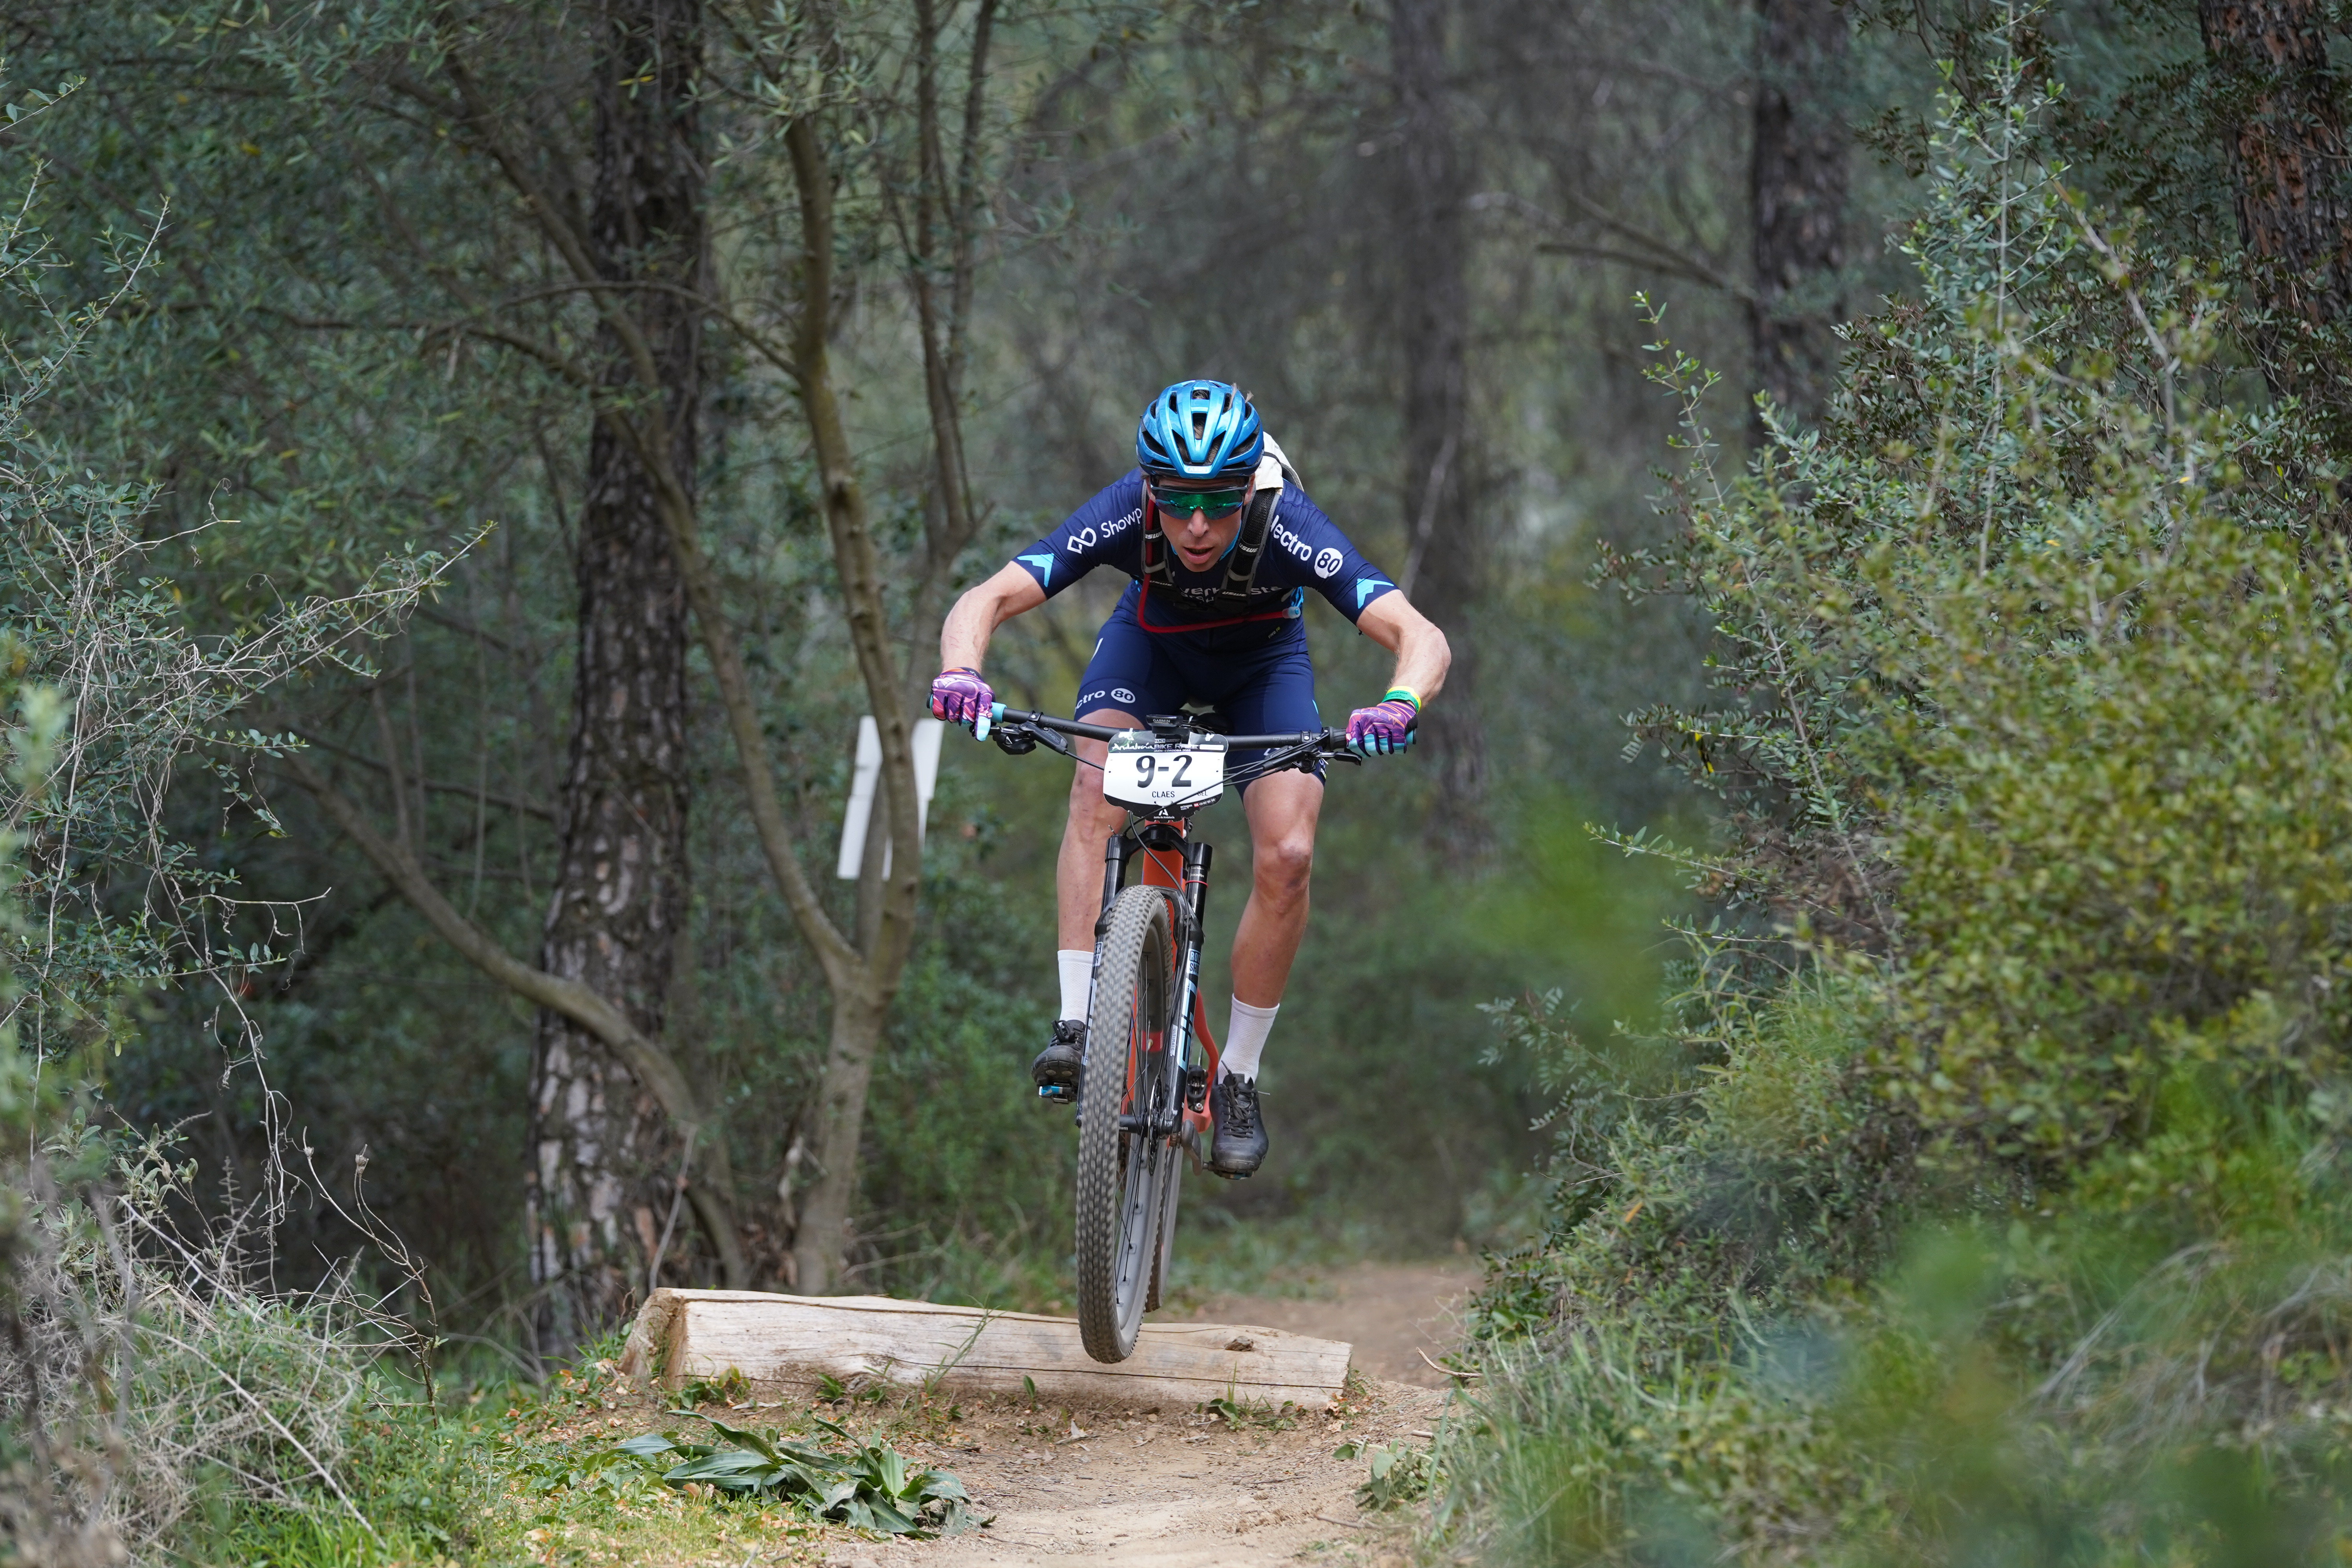 Photo copyright Andalucia Bike Race